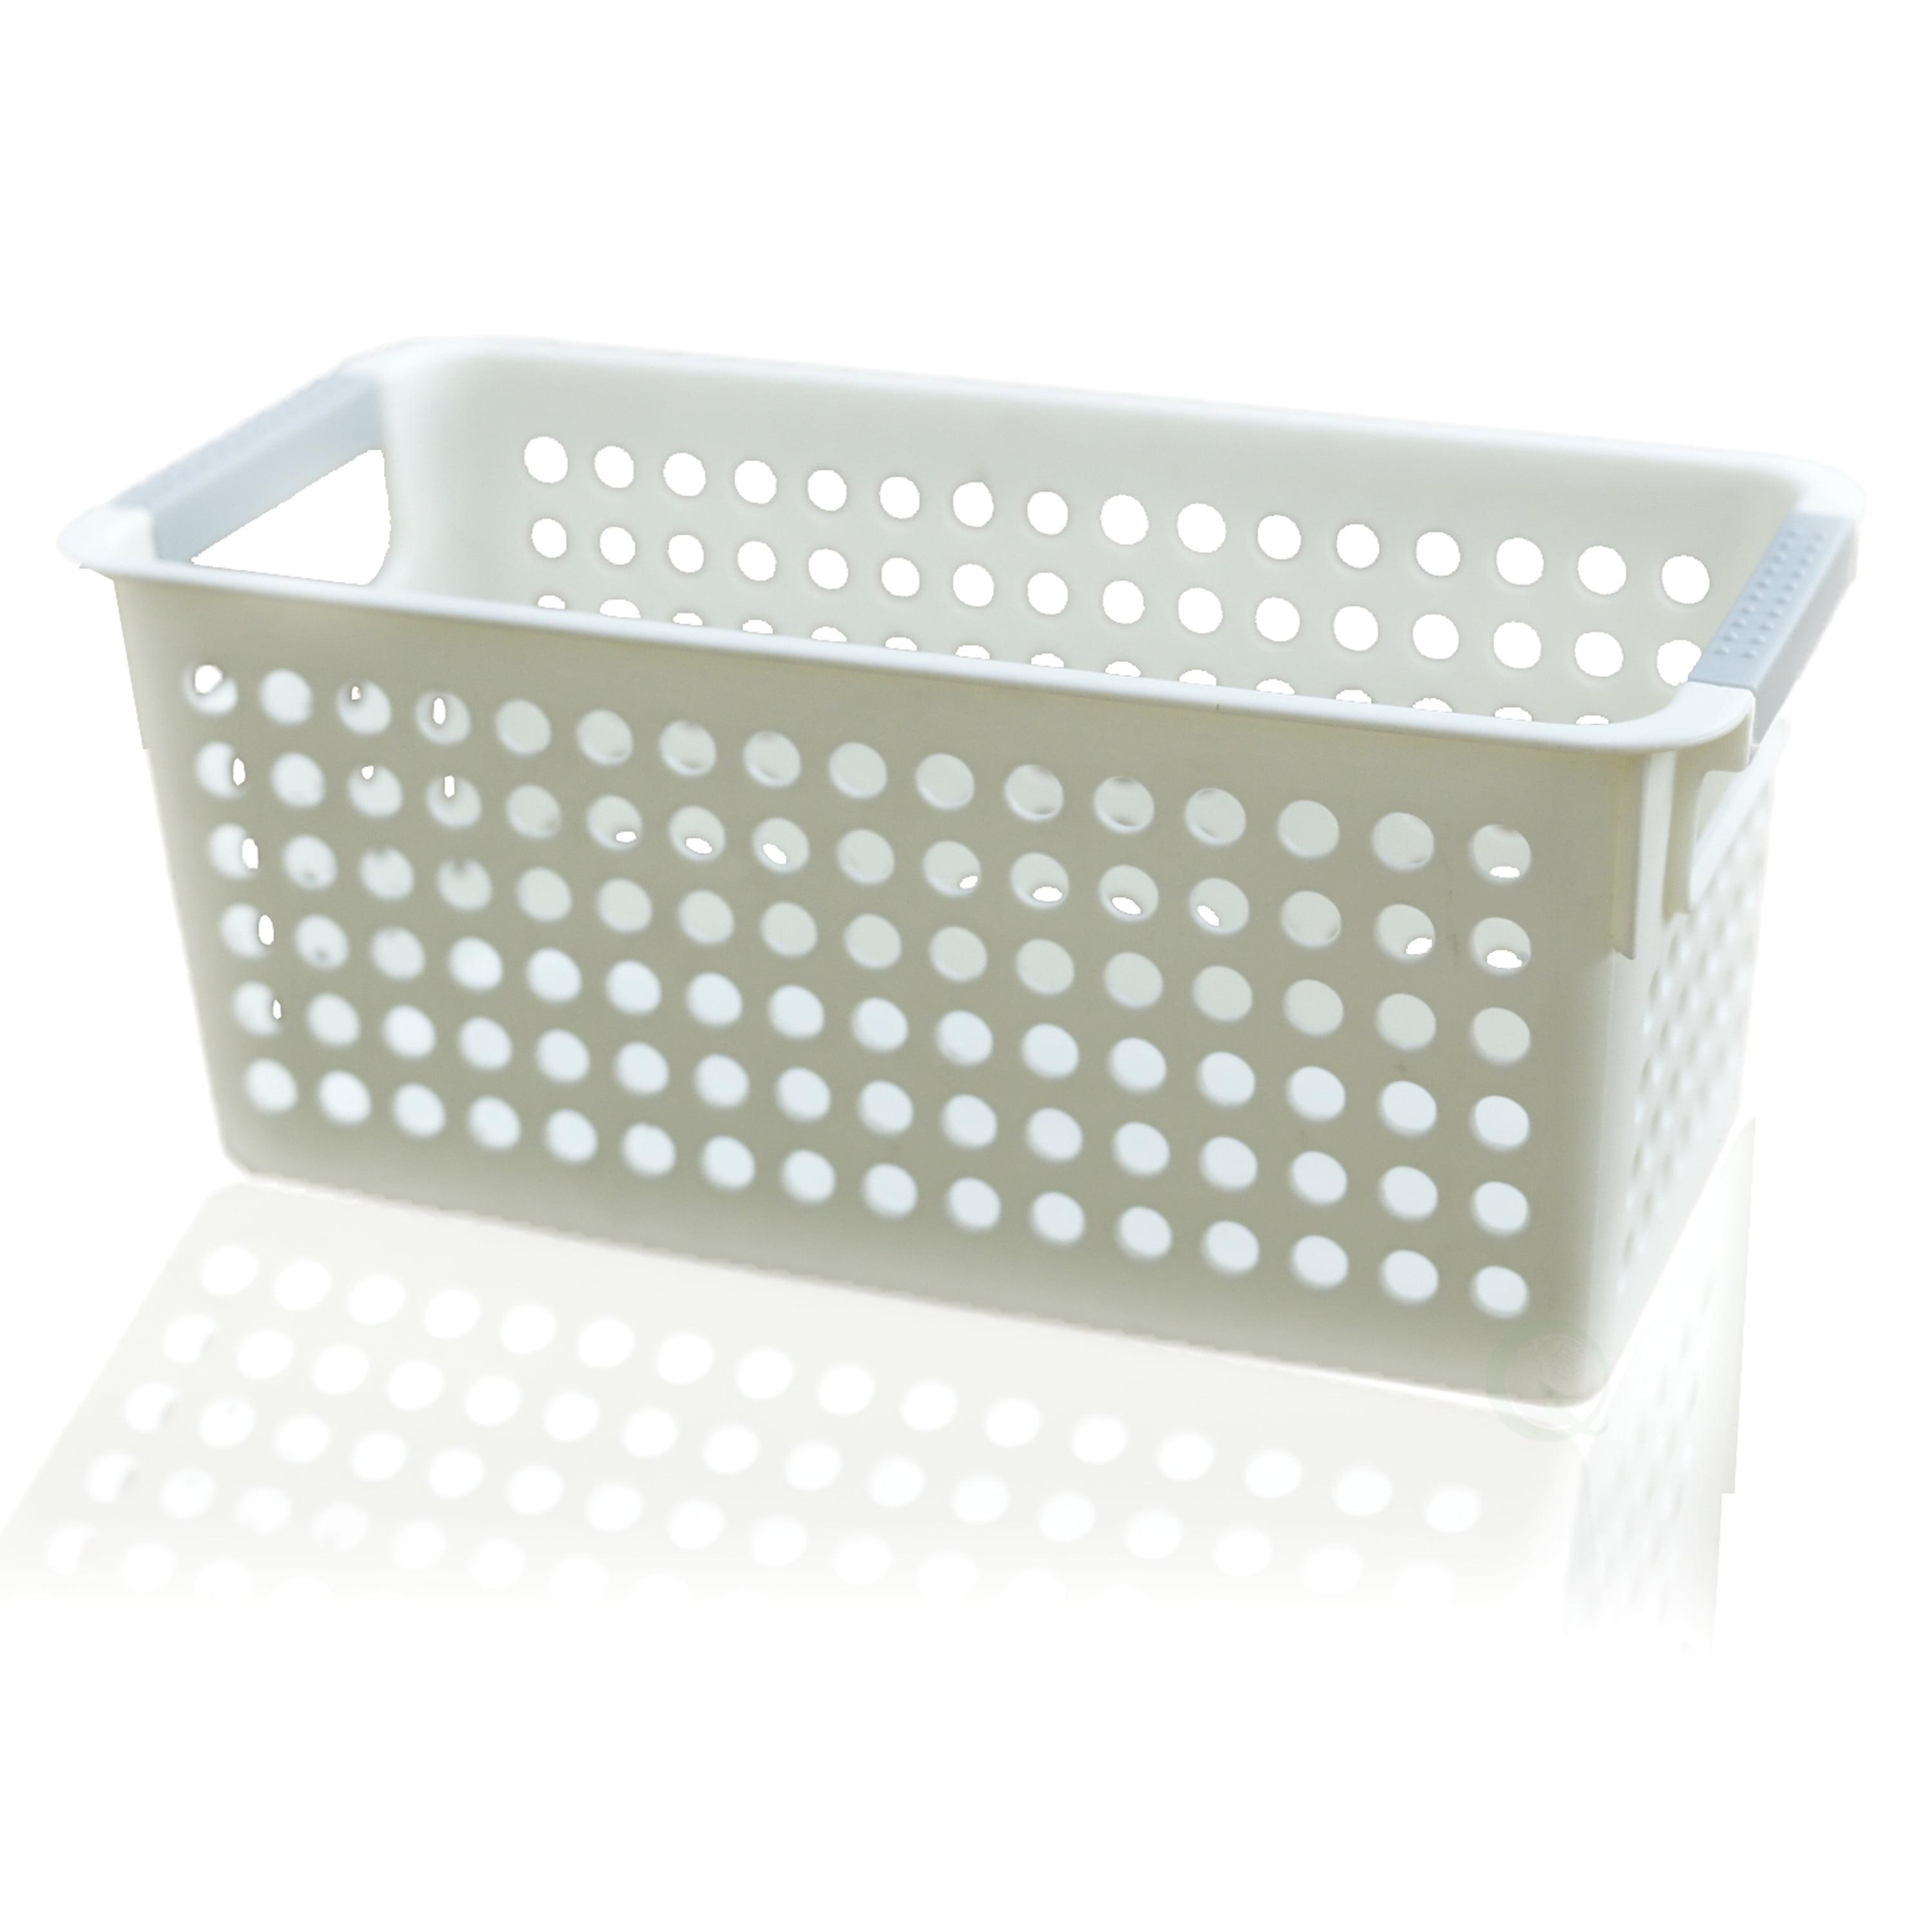 Compact White Rectangular Plastic Organizer Basket with Grip Handles